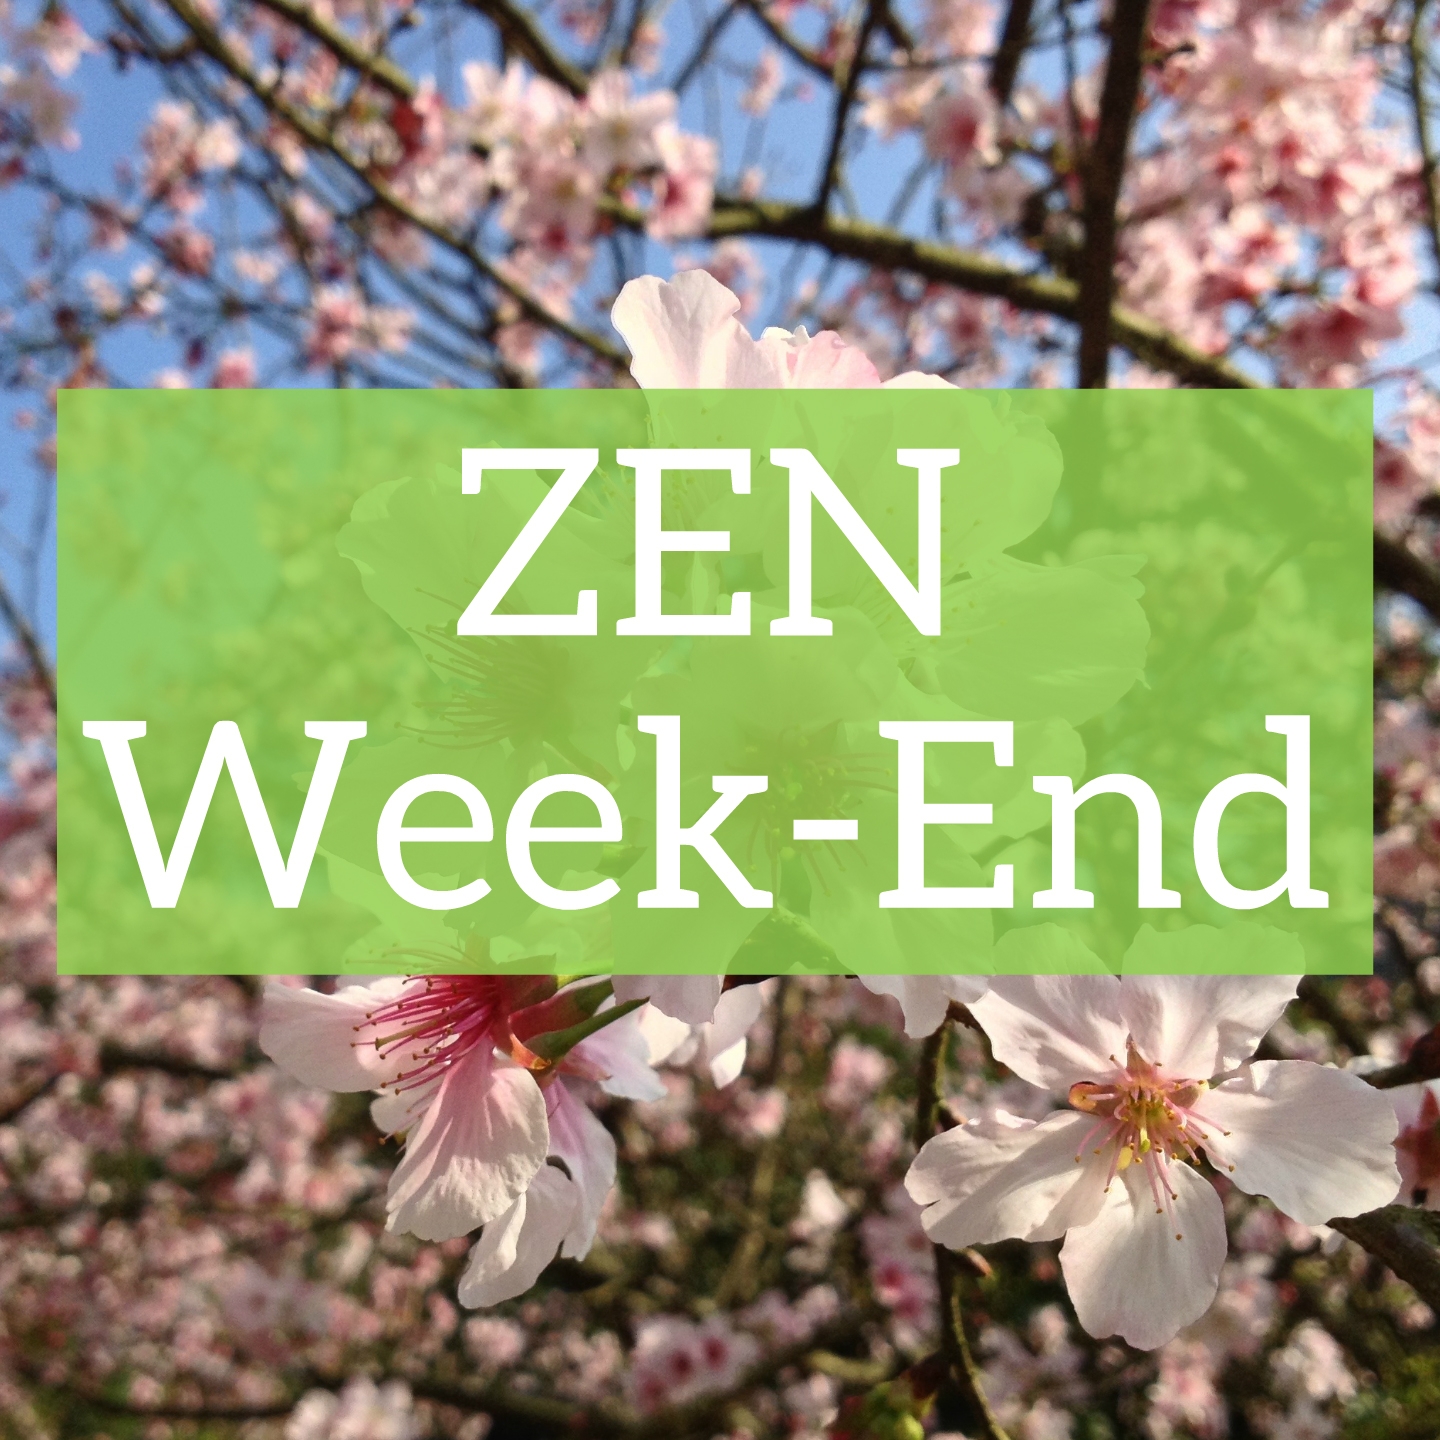 Zen Week-End